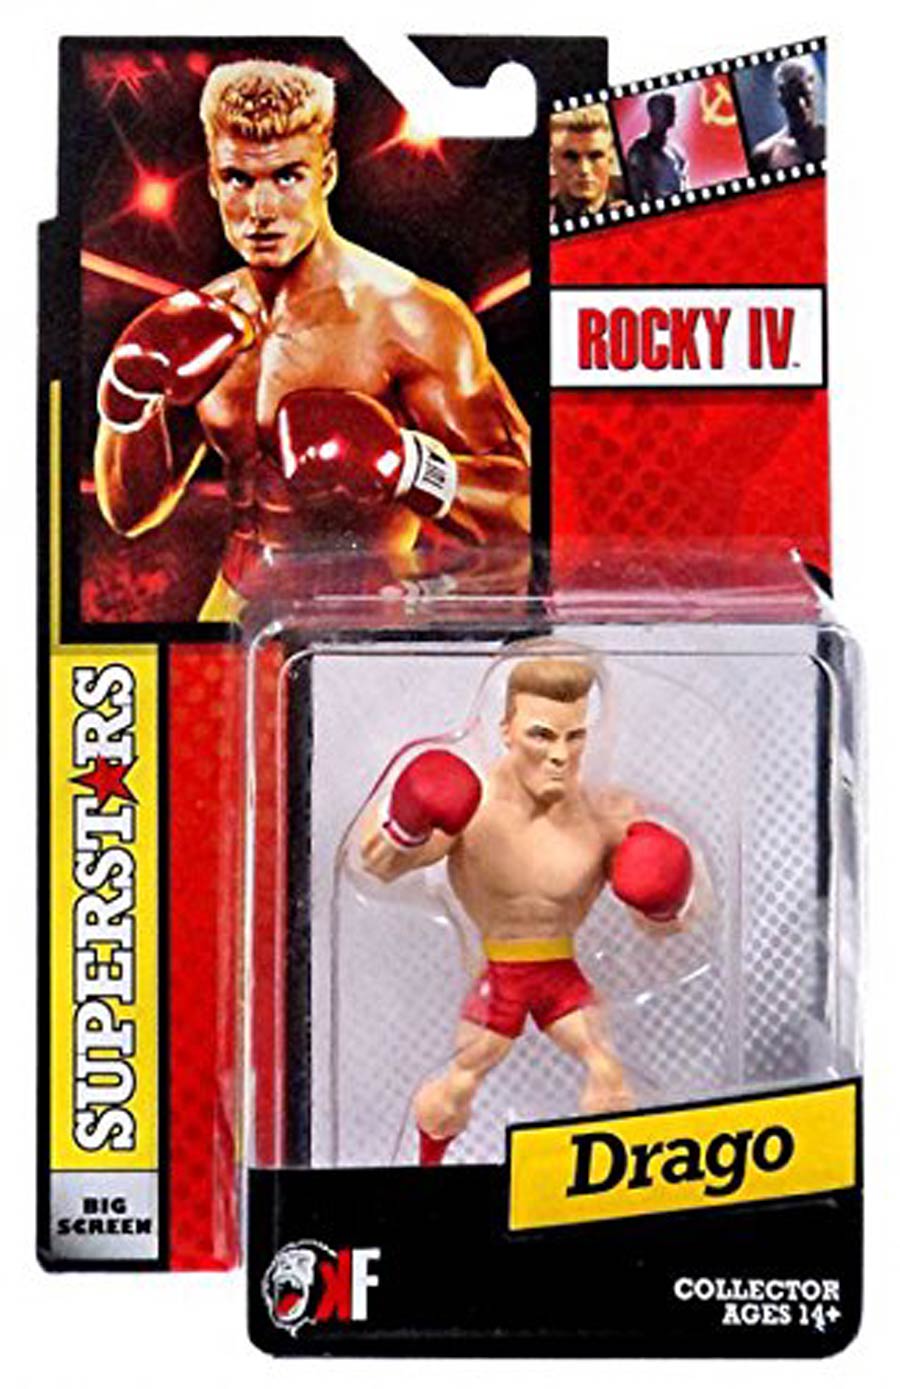 Big Screen Superstars Mini Figure - Drago (Rocky IV)